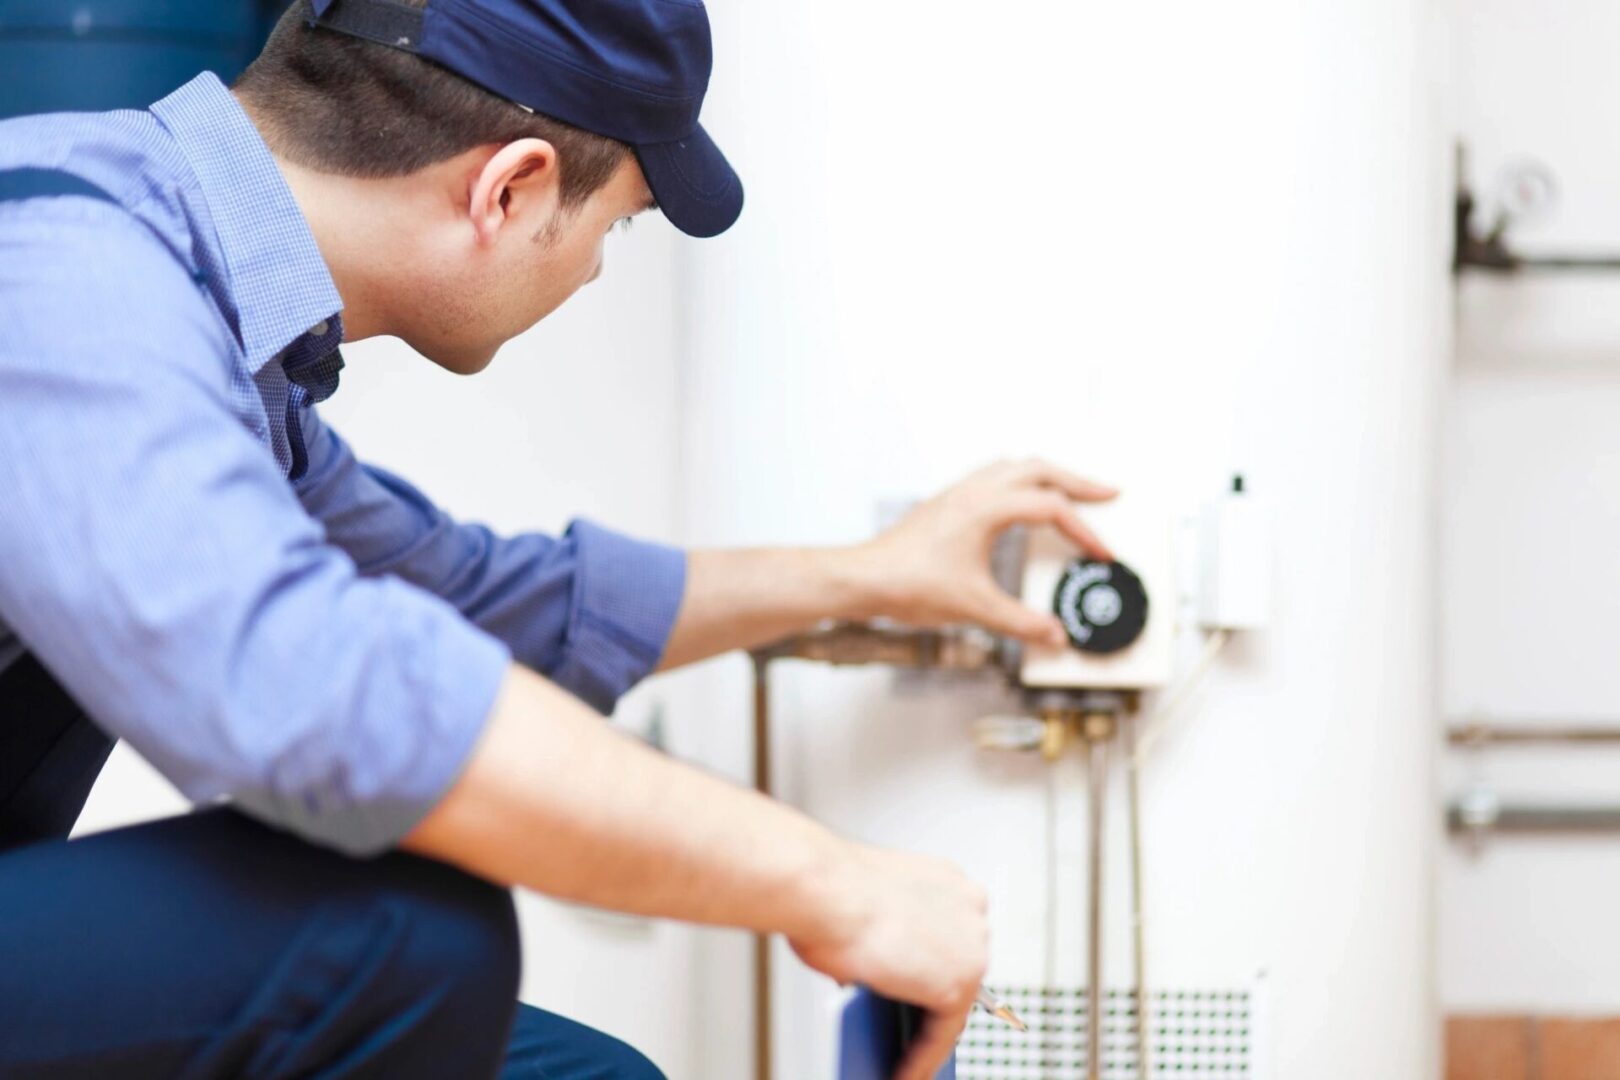 A man in blue shirt fixing a water heater.